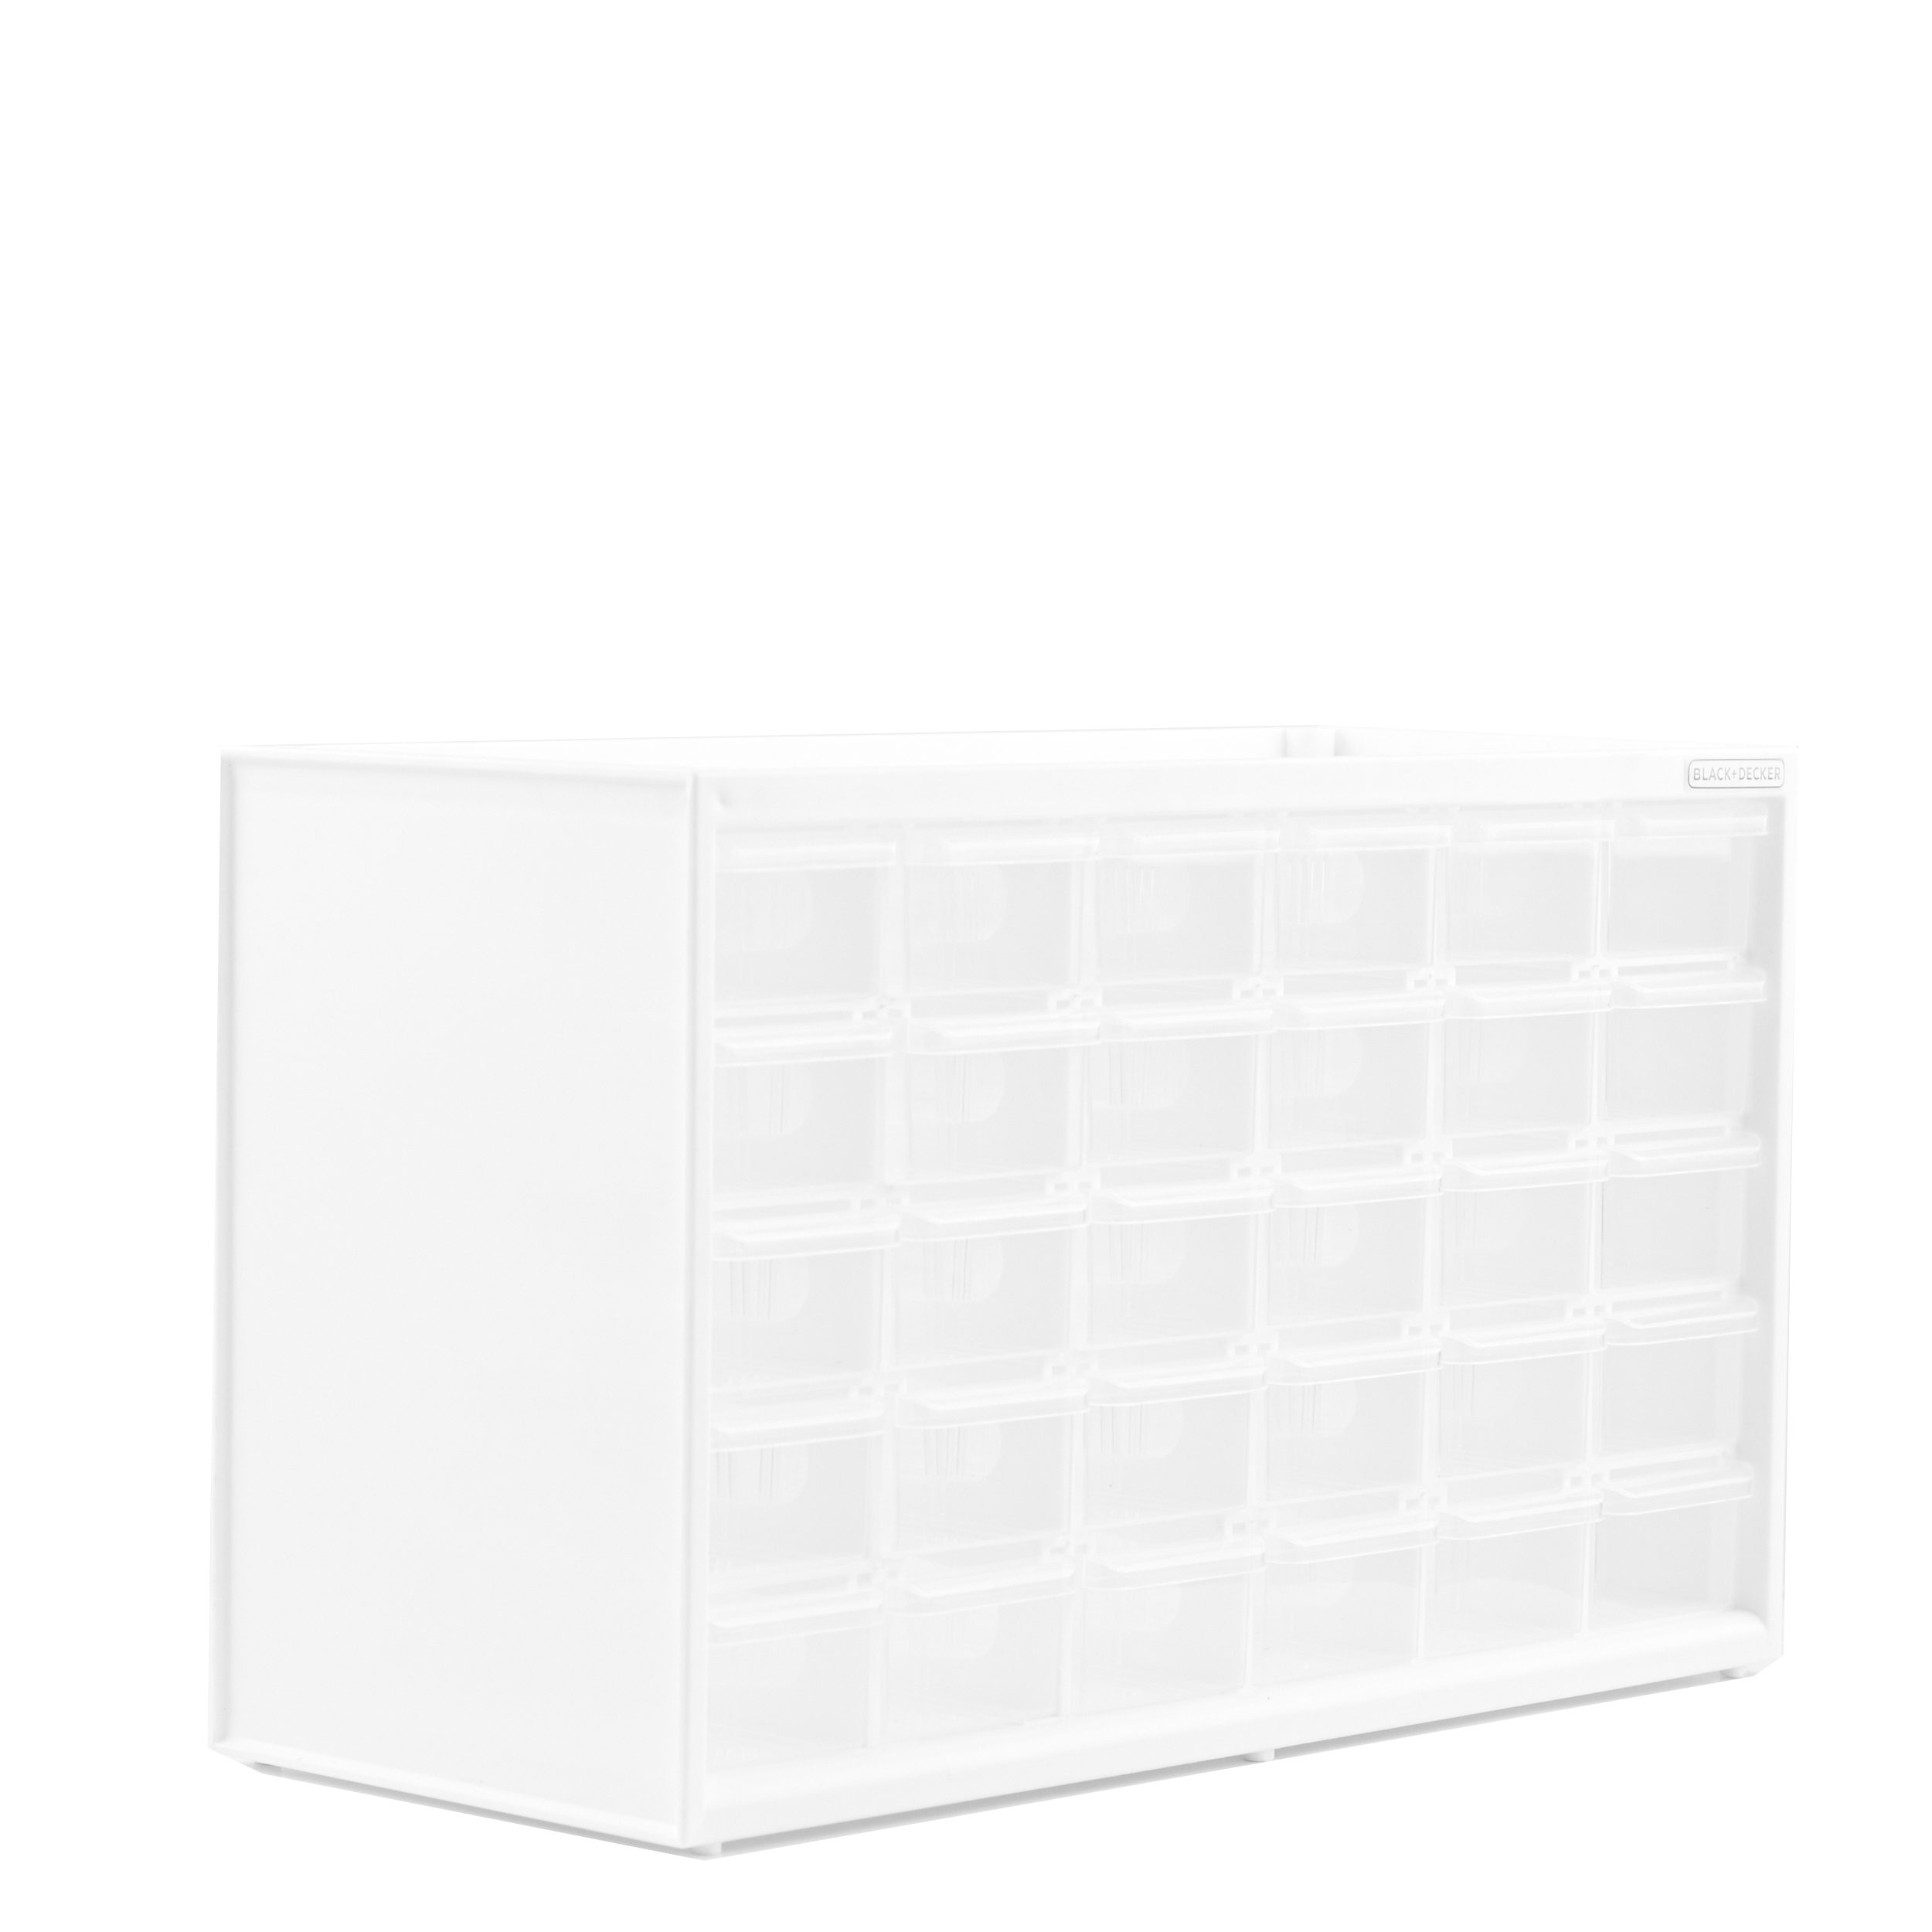 Storage Organizer, Large & Small 39 Drawer Bin Modular Storage System |  BLACK+DECKER